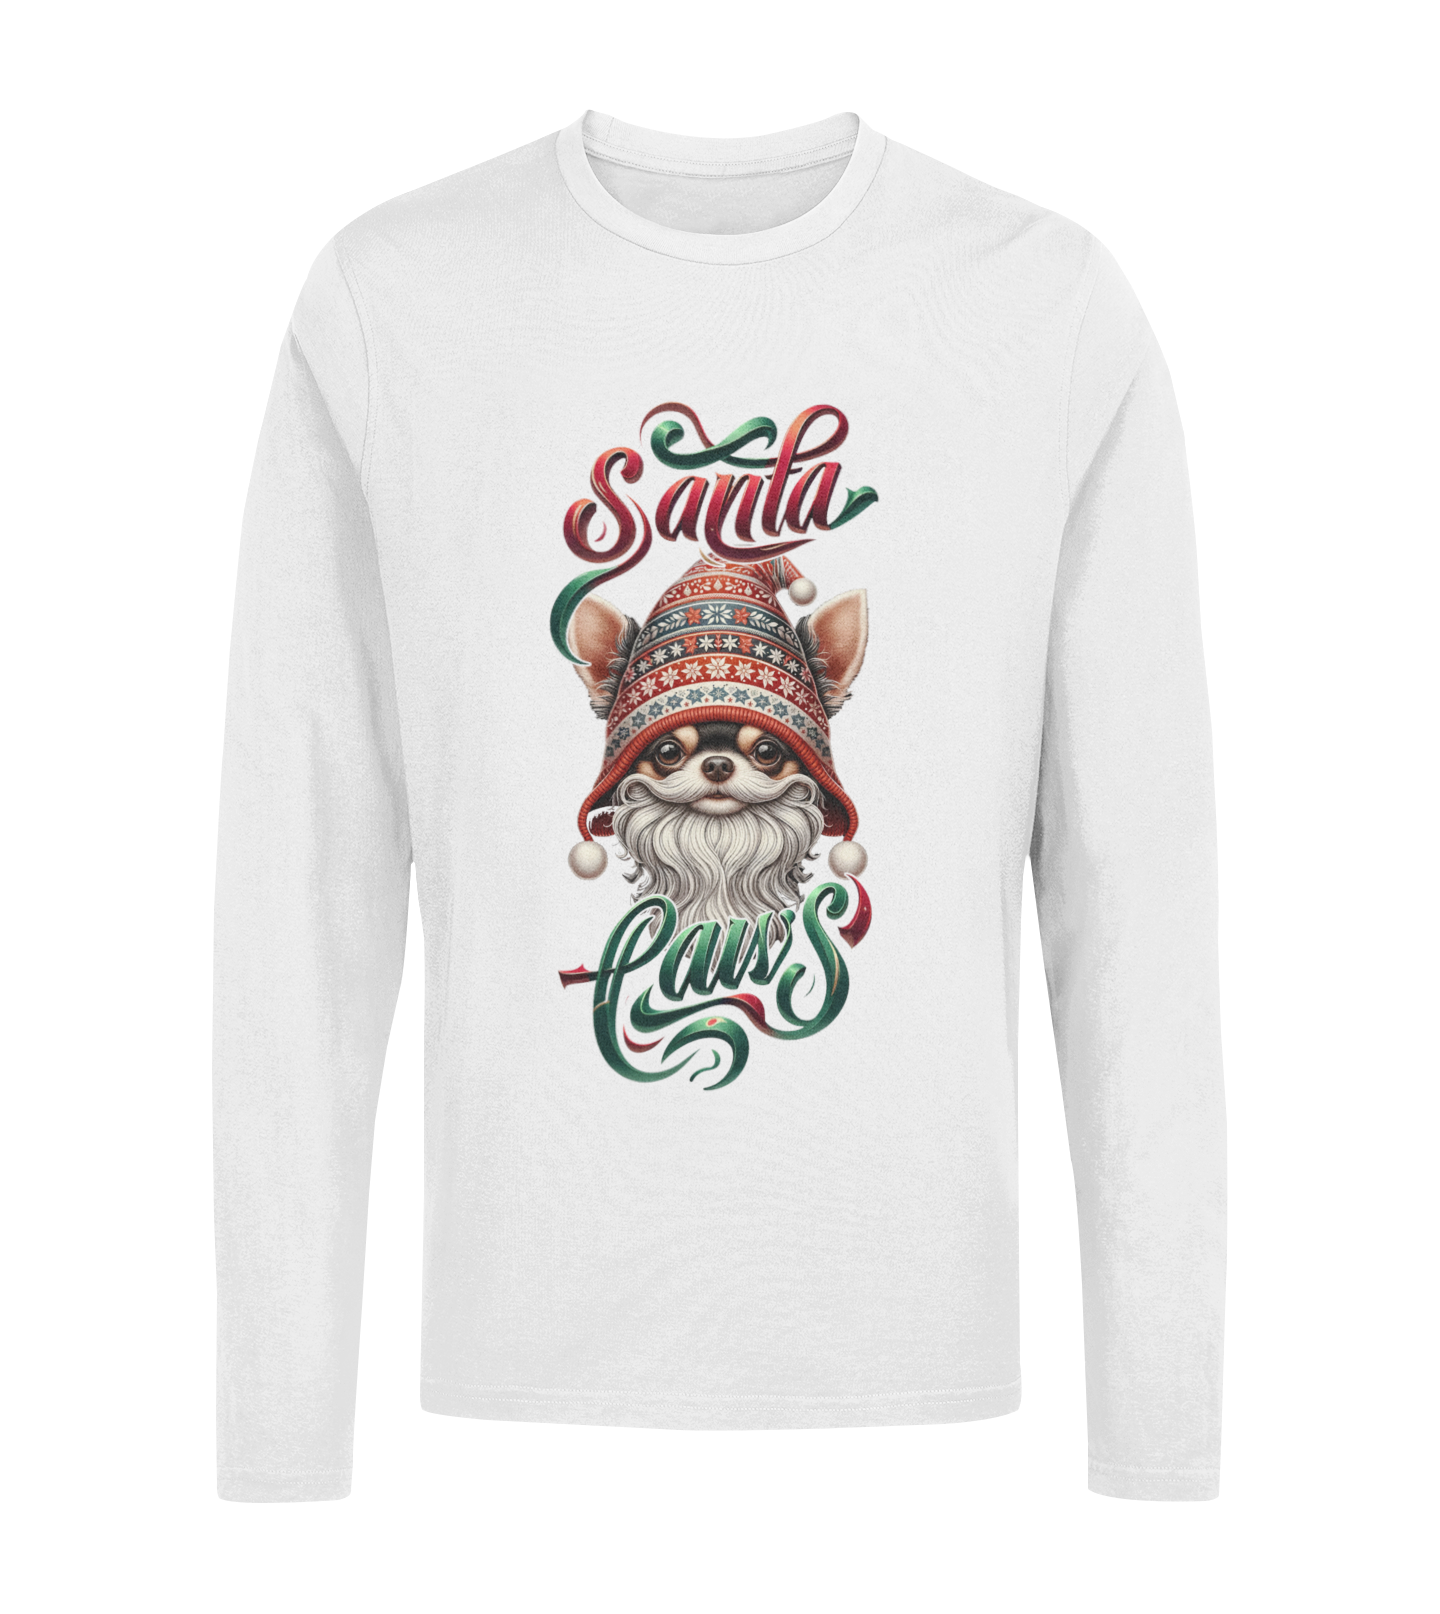 Santa Paws Long Sleeve Tee -Chihuahua Design - 100% Cotton - USA Made - Holiday Party Favorites